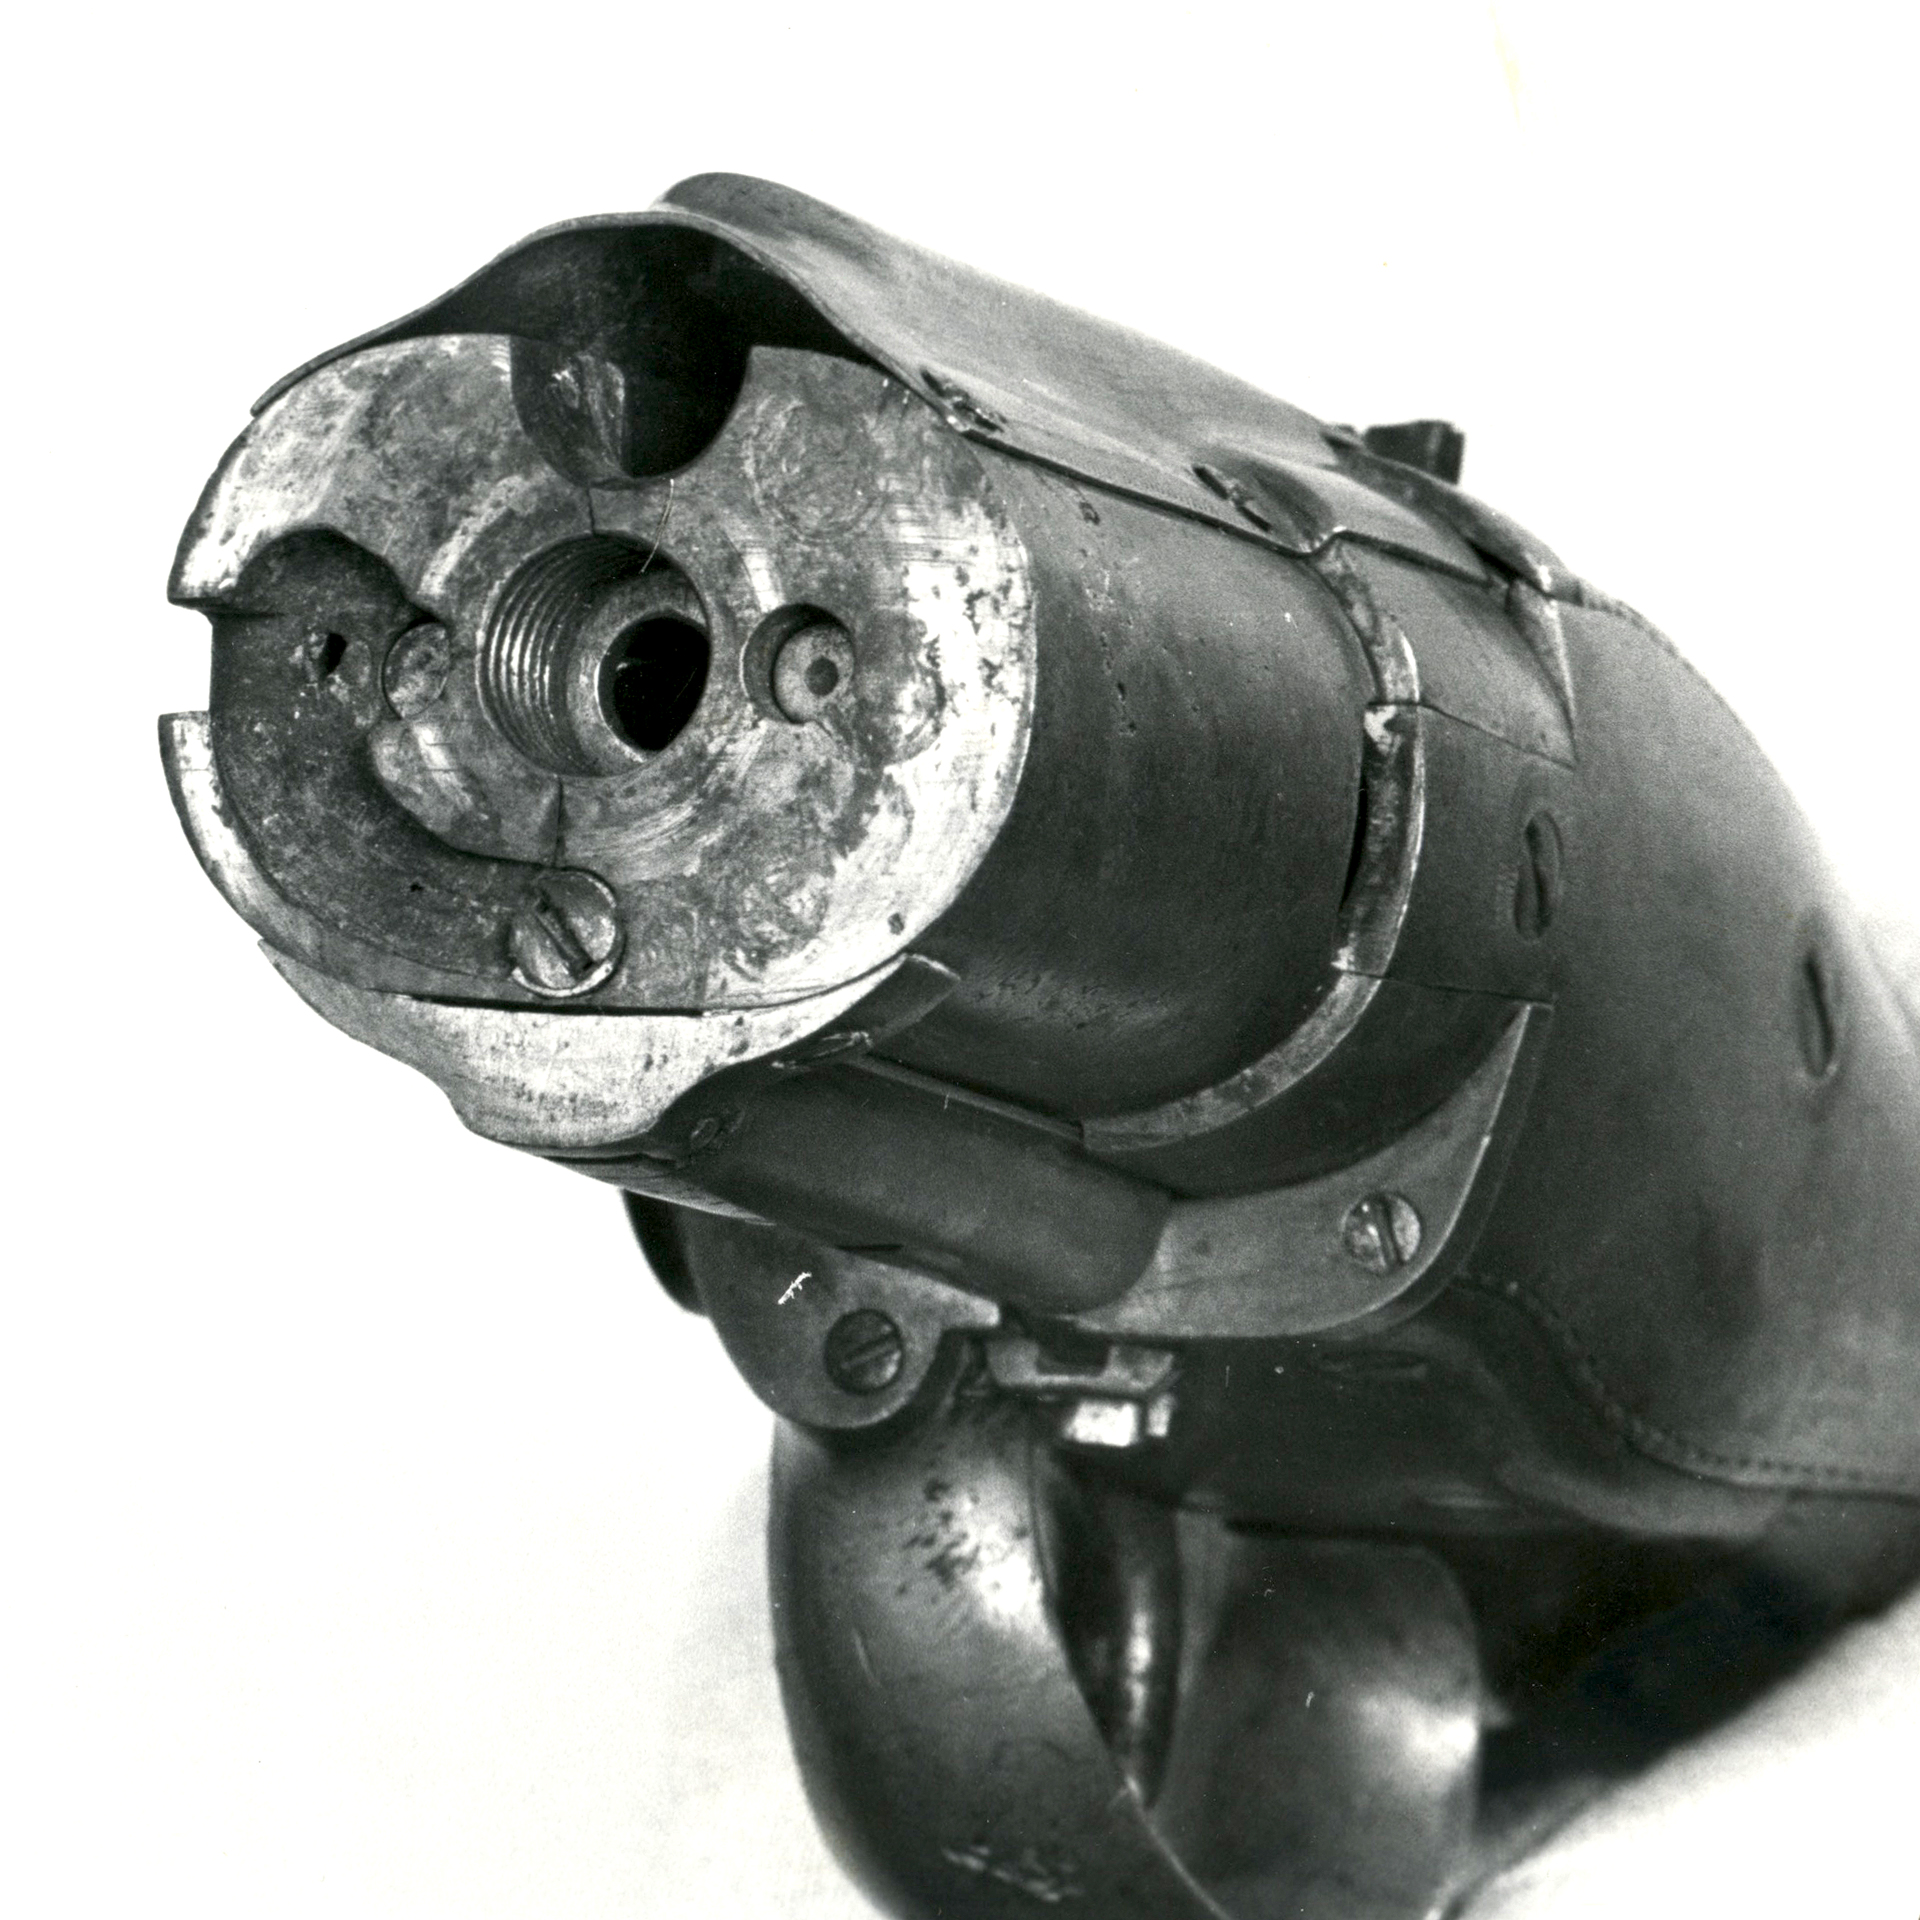 Lorenzo Sibert Virginia Pacificator receiver gun part in hand white background